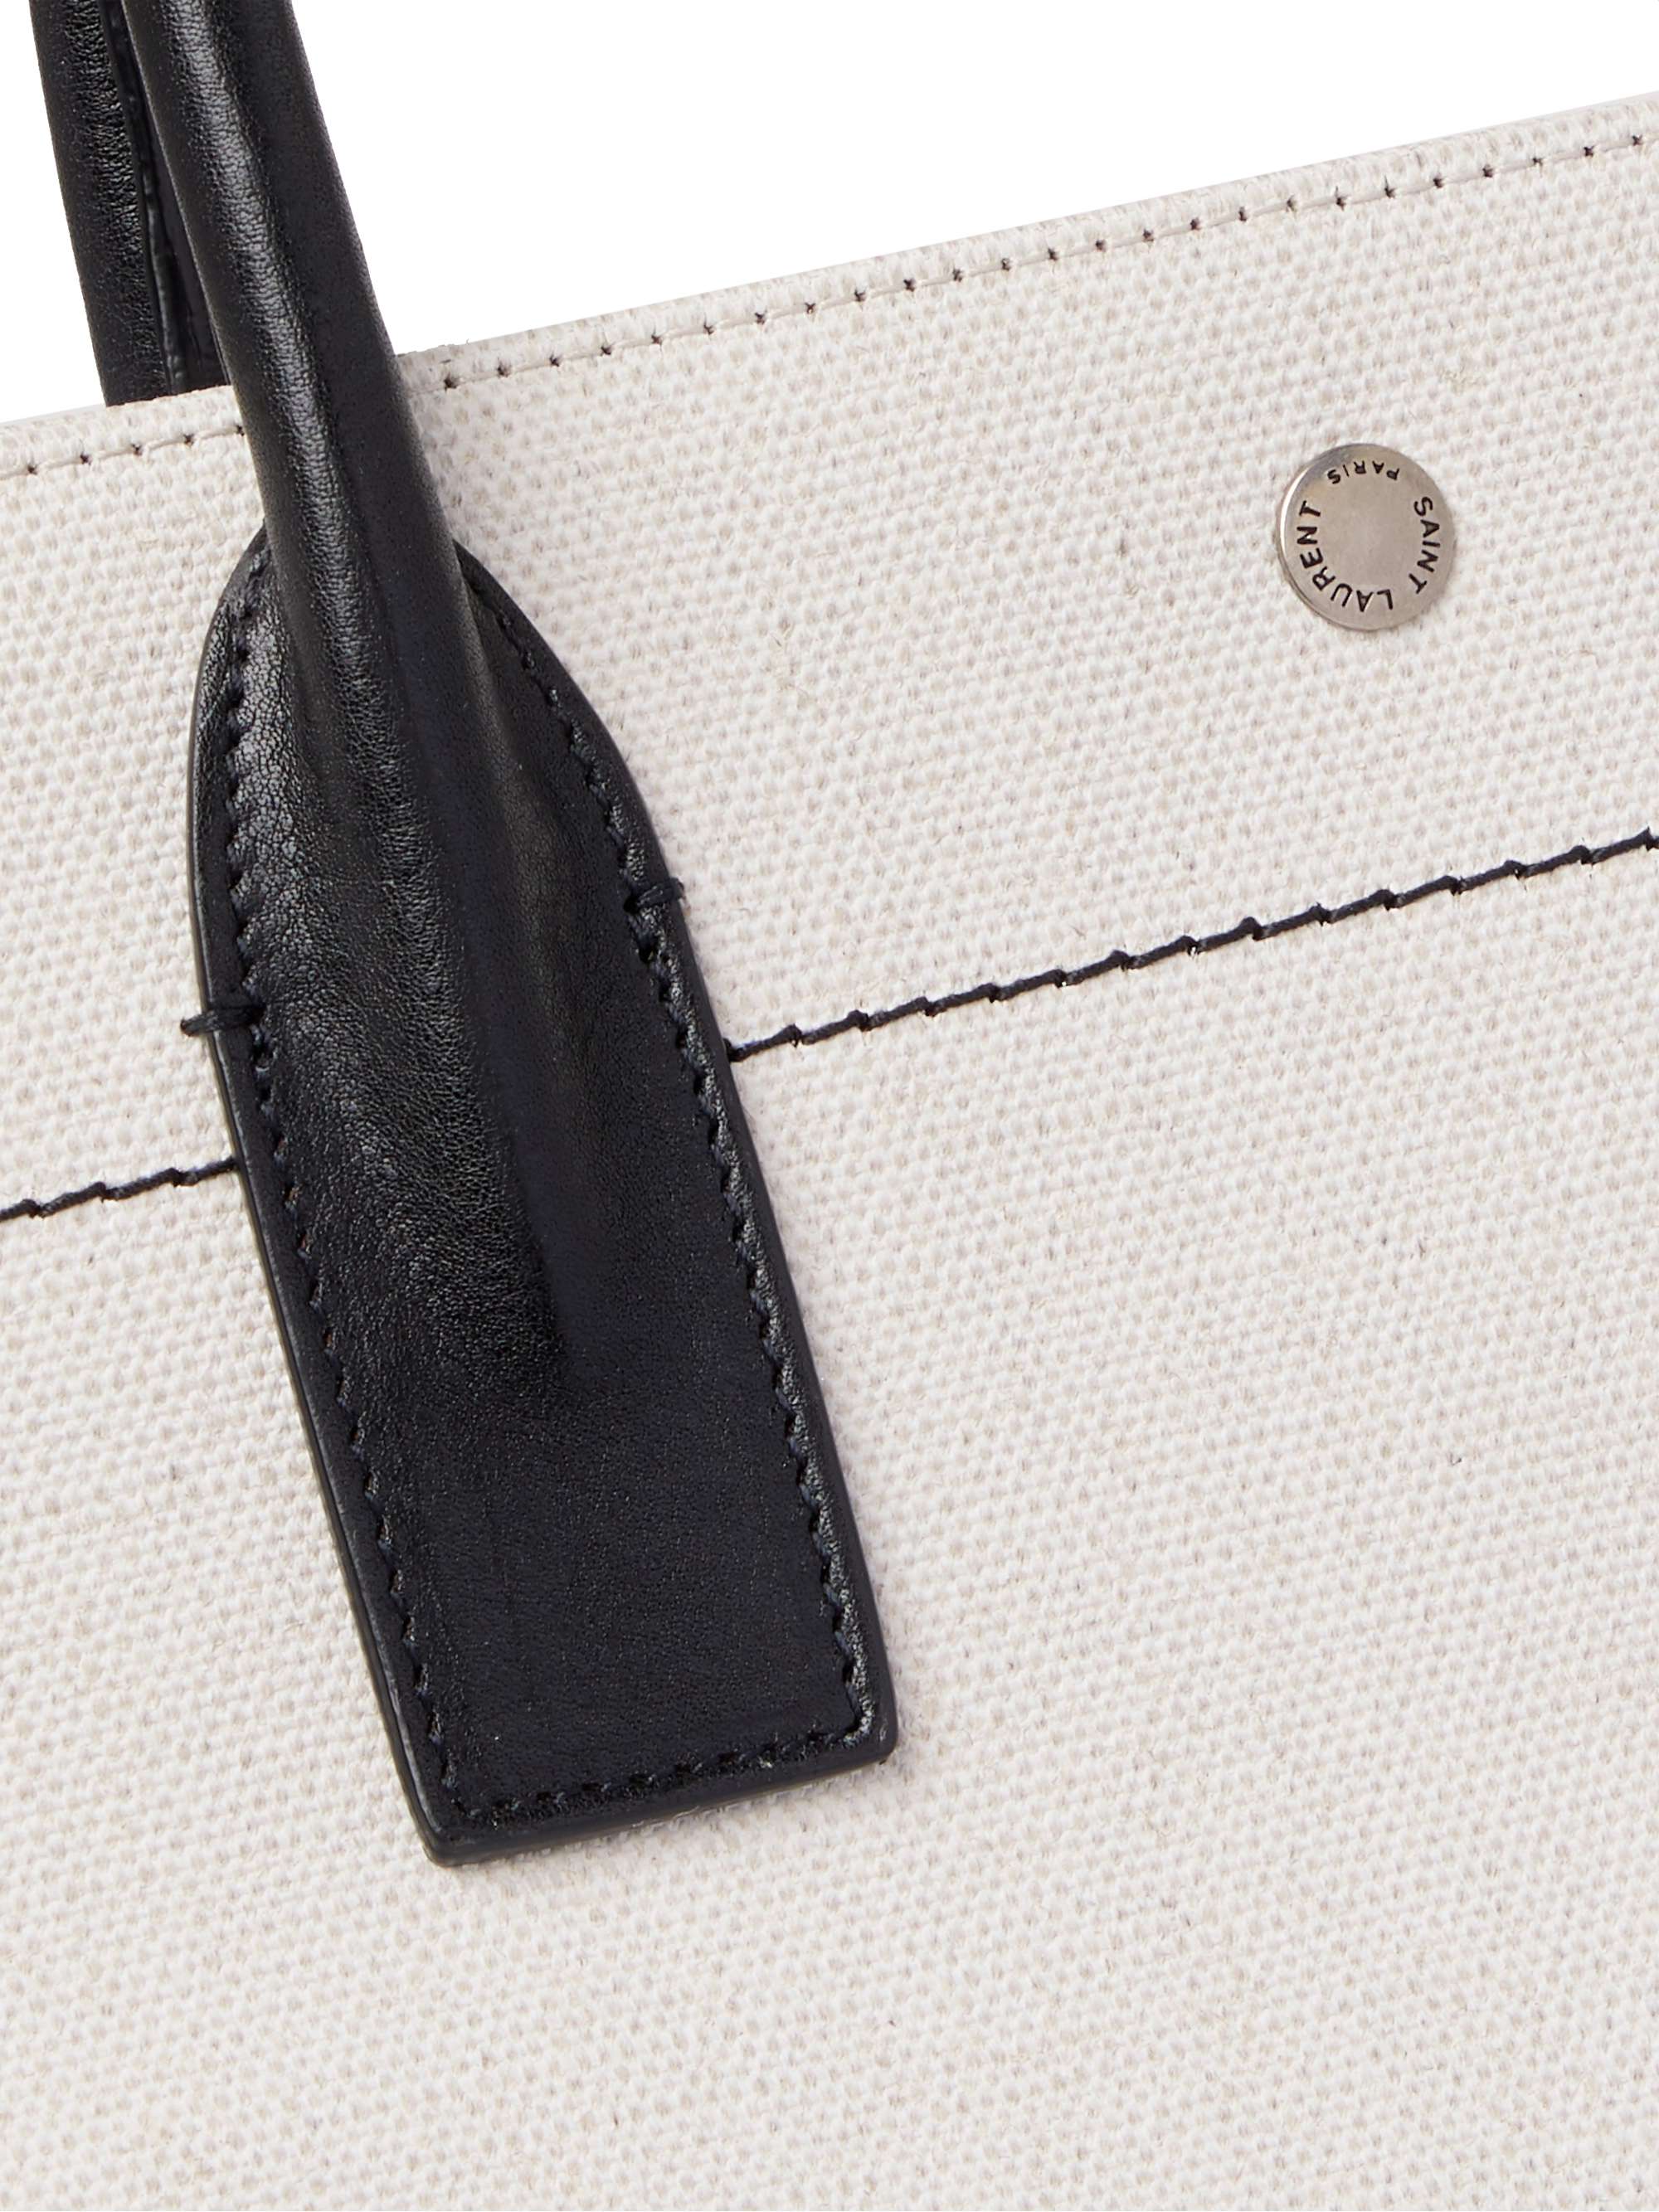 SAINT LAURENT Noe Logo-Print Leather-Trimmed Canvas Tote Bag